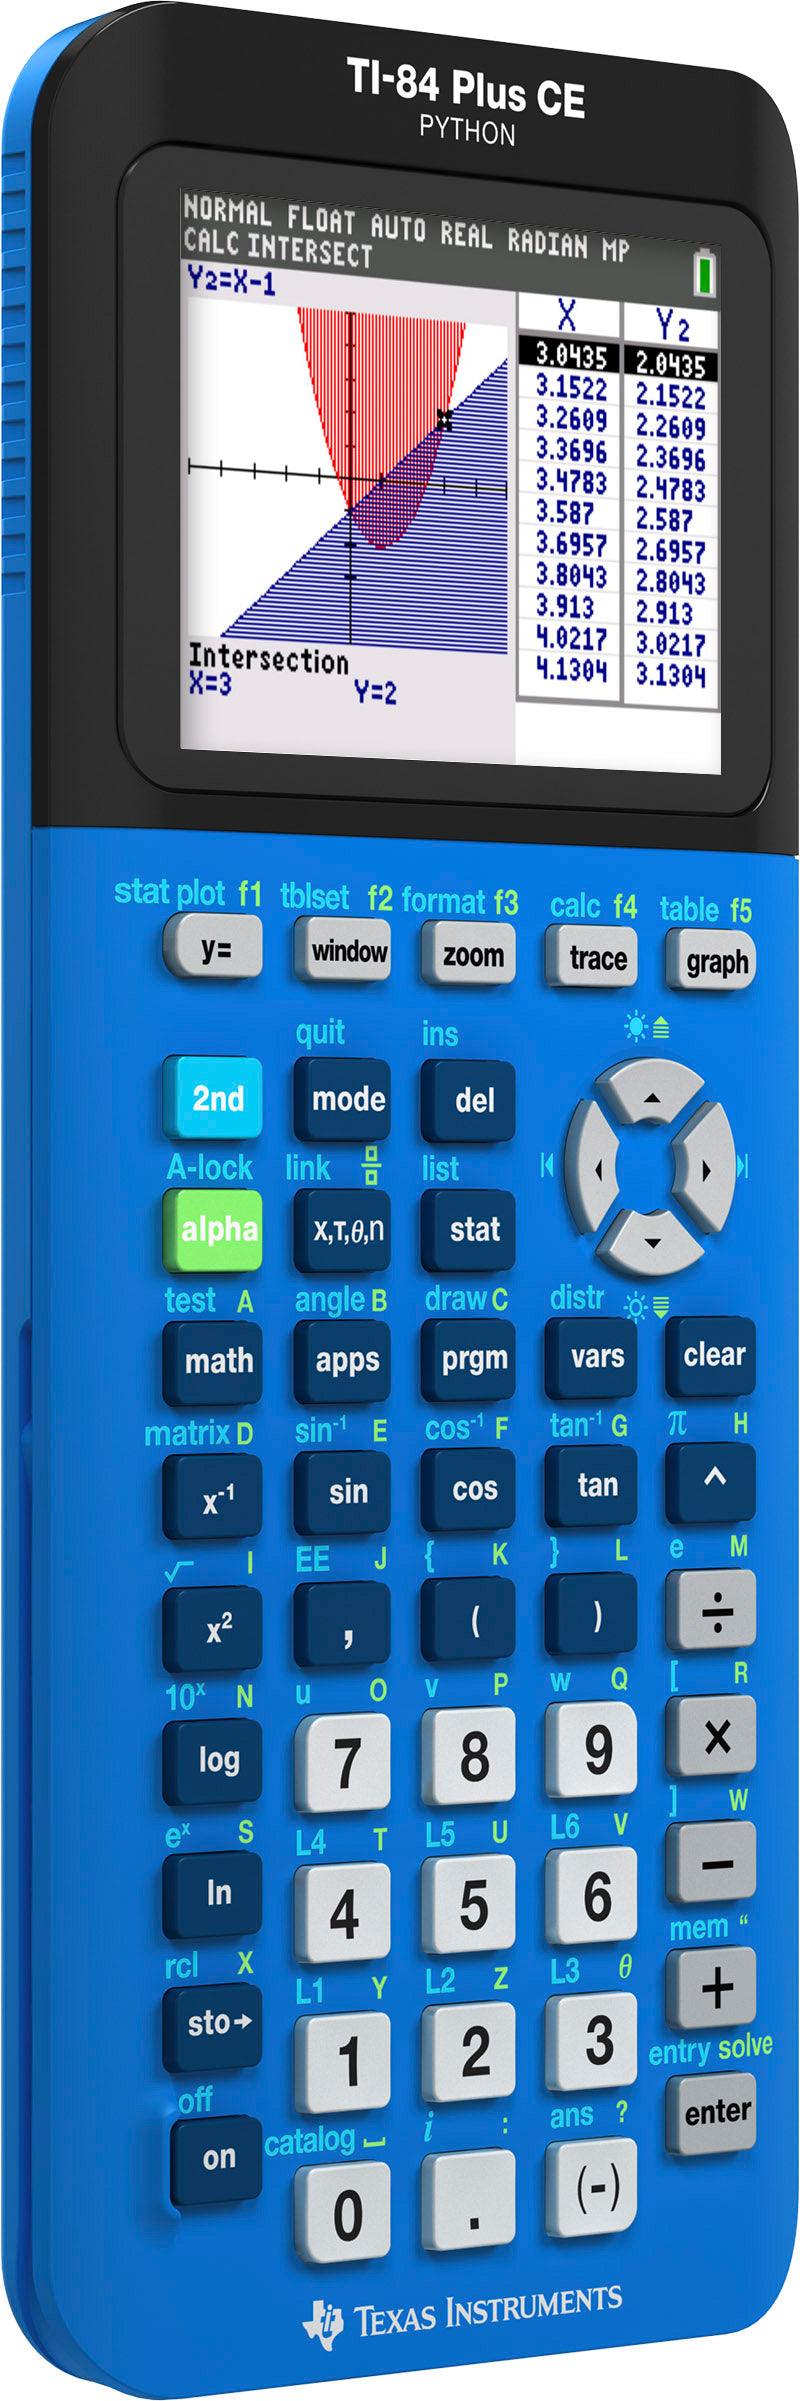 Ti-84 Plus CE Python Graphing Calculator - Bionic Blue - Underwood Distributing Co.